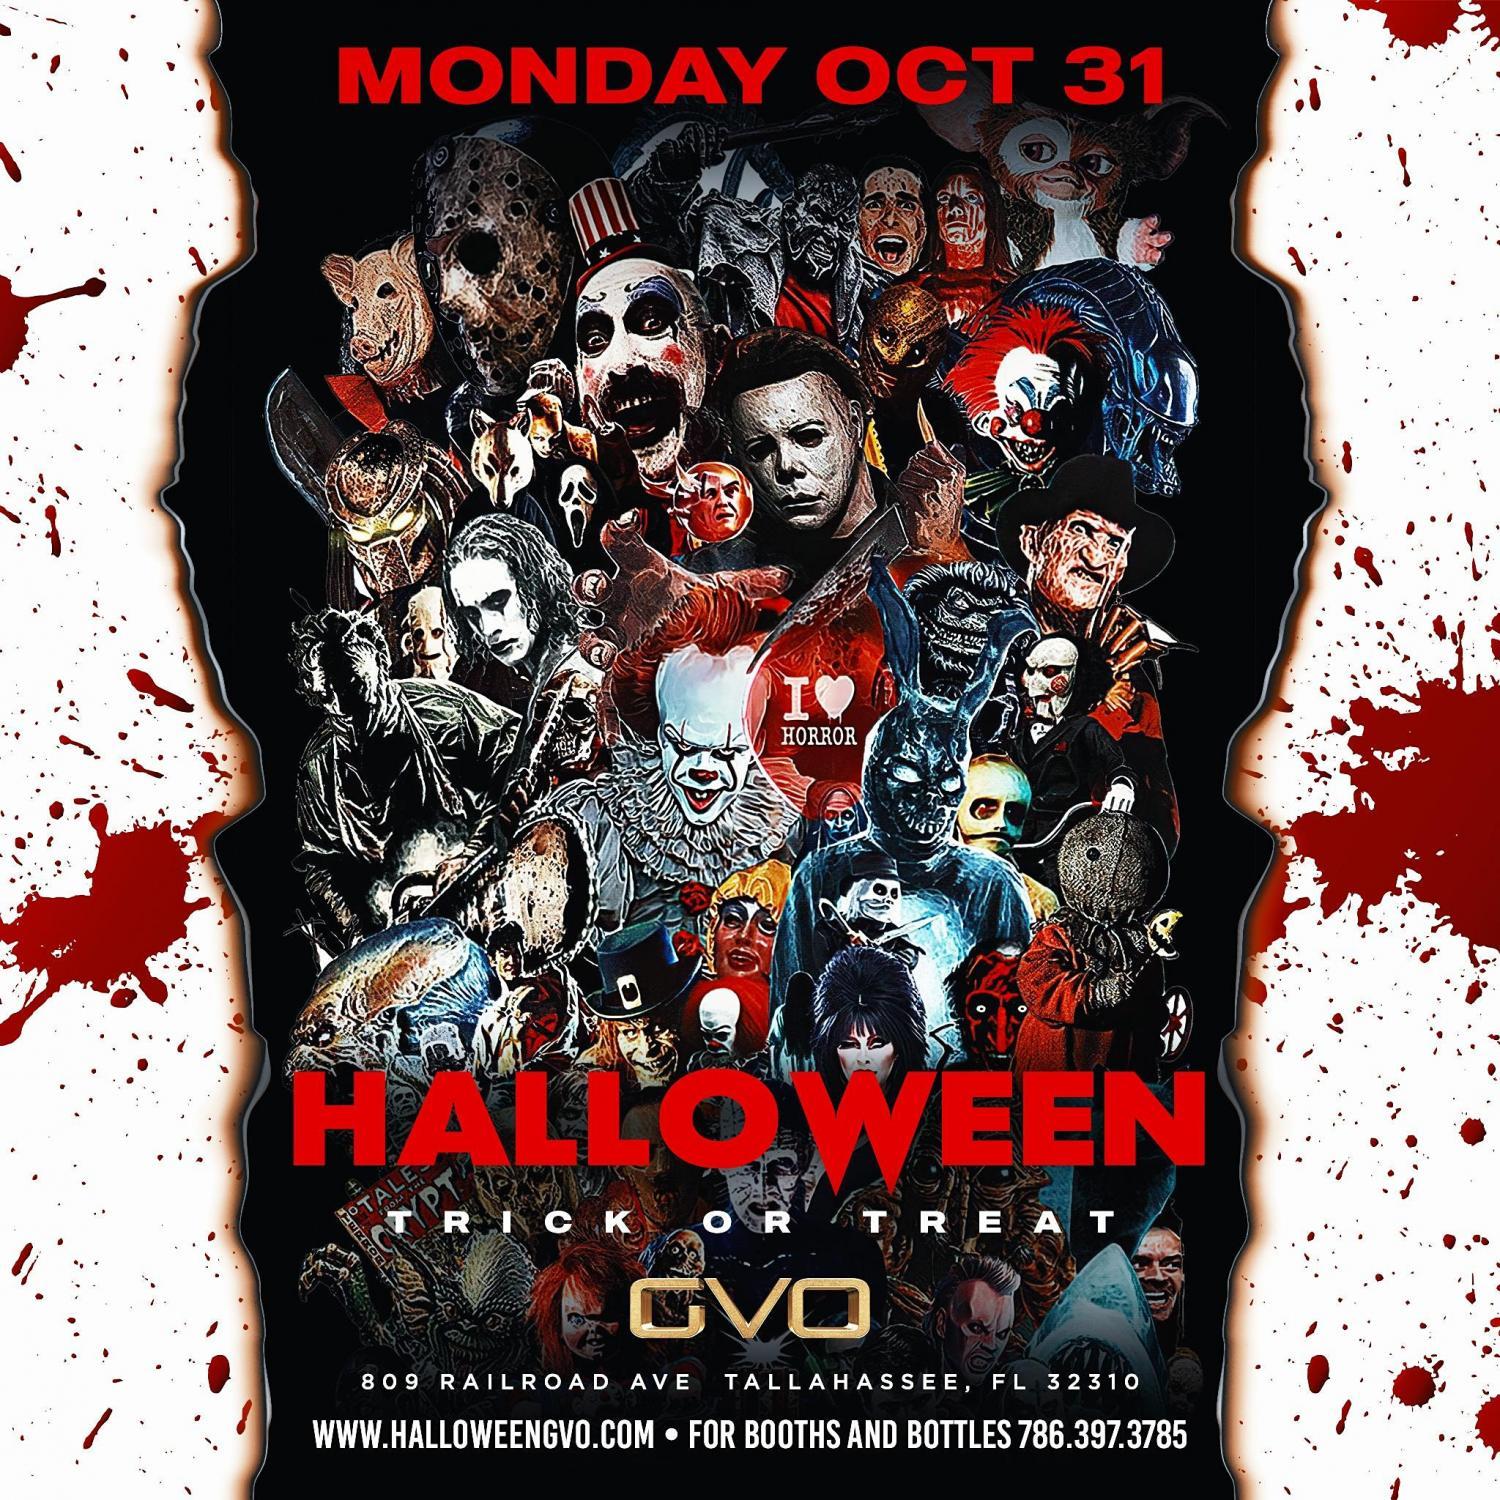 Halloween @ GVO Happy Halloween
Mon Oct 31, 10:00 PM - Wed Nov 2, 2:00 AM
in 11 days